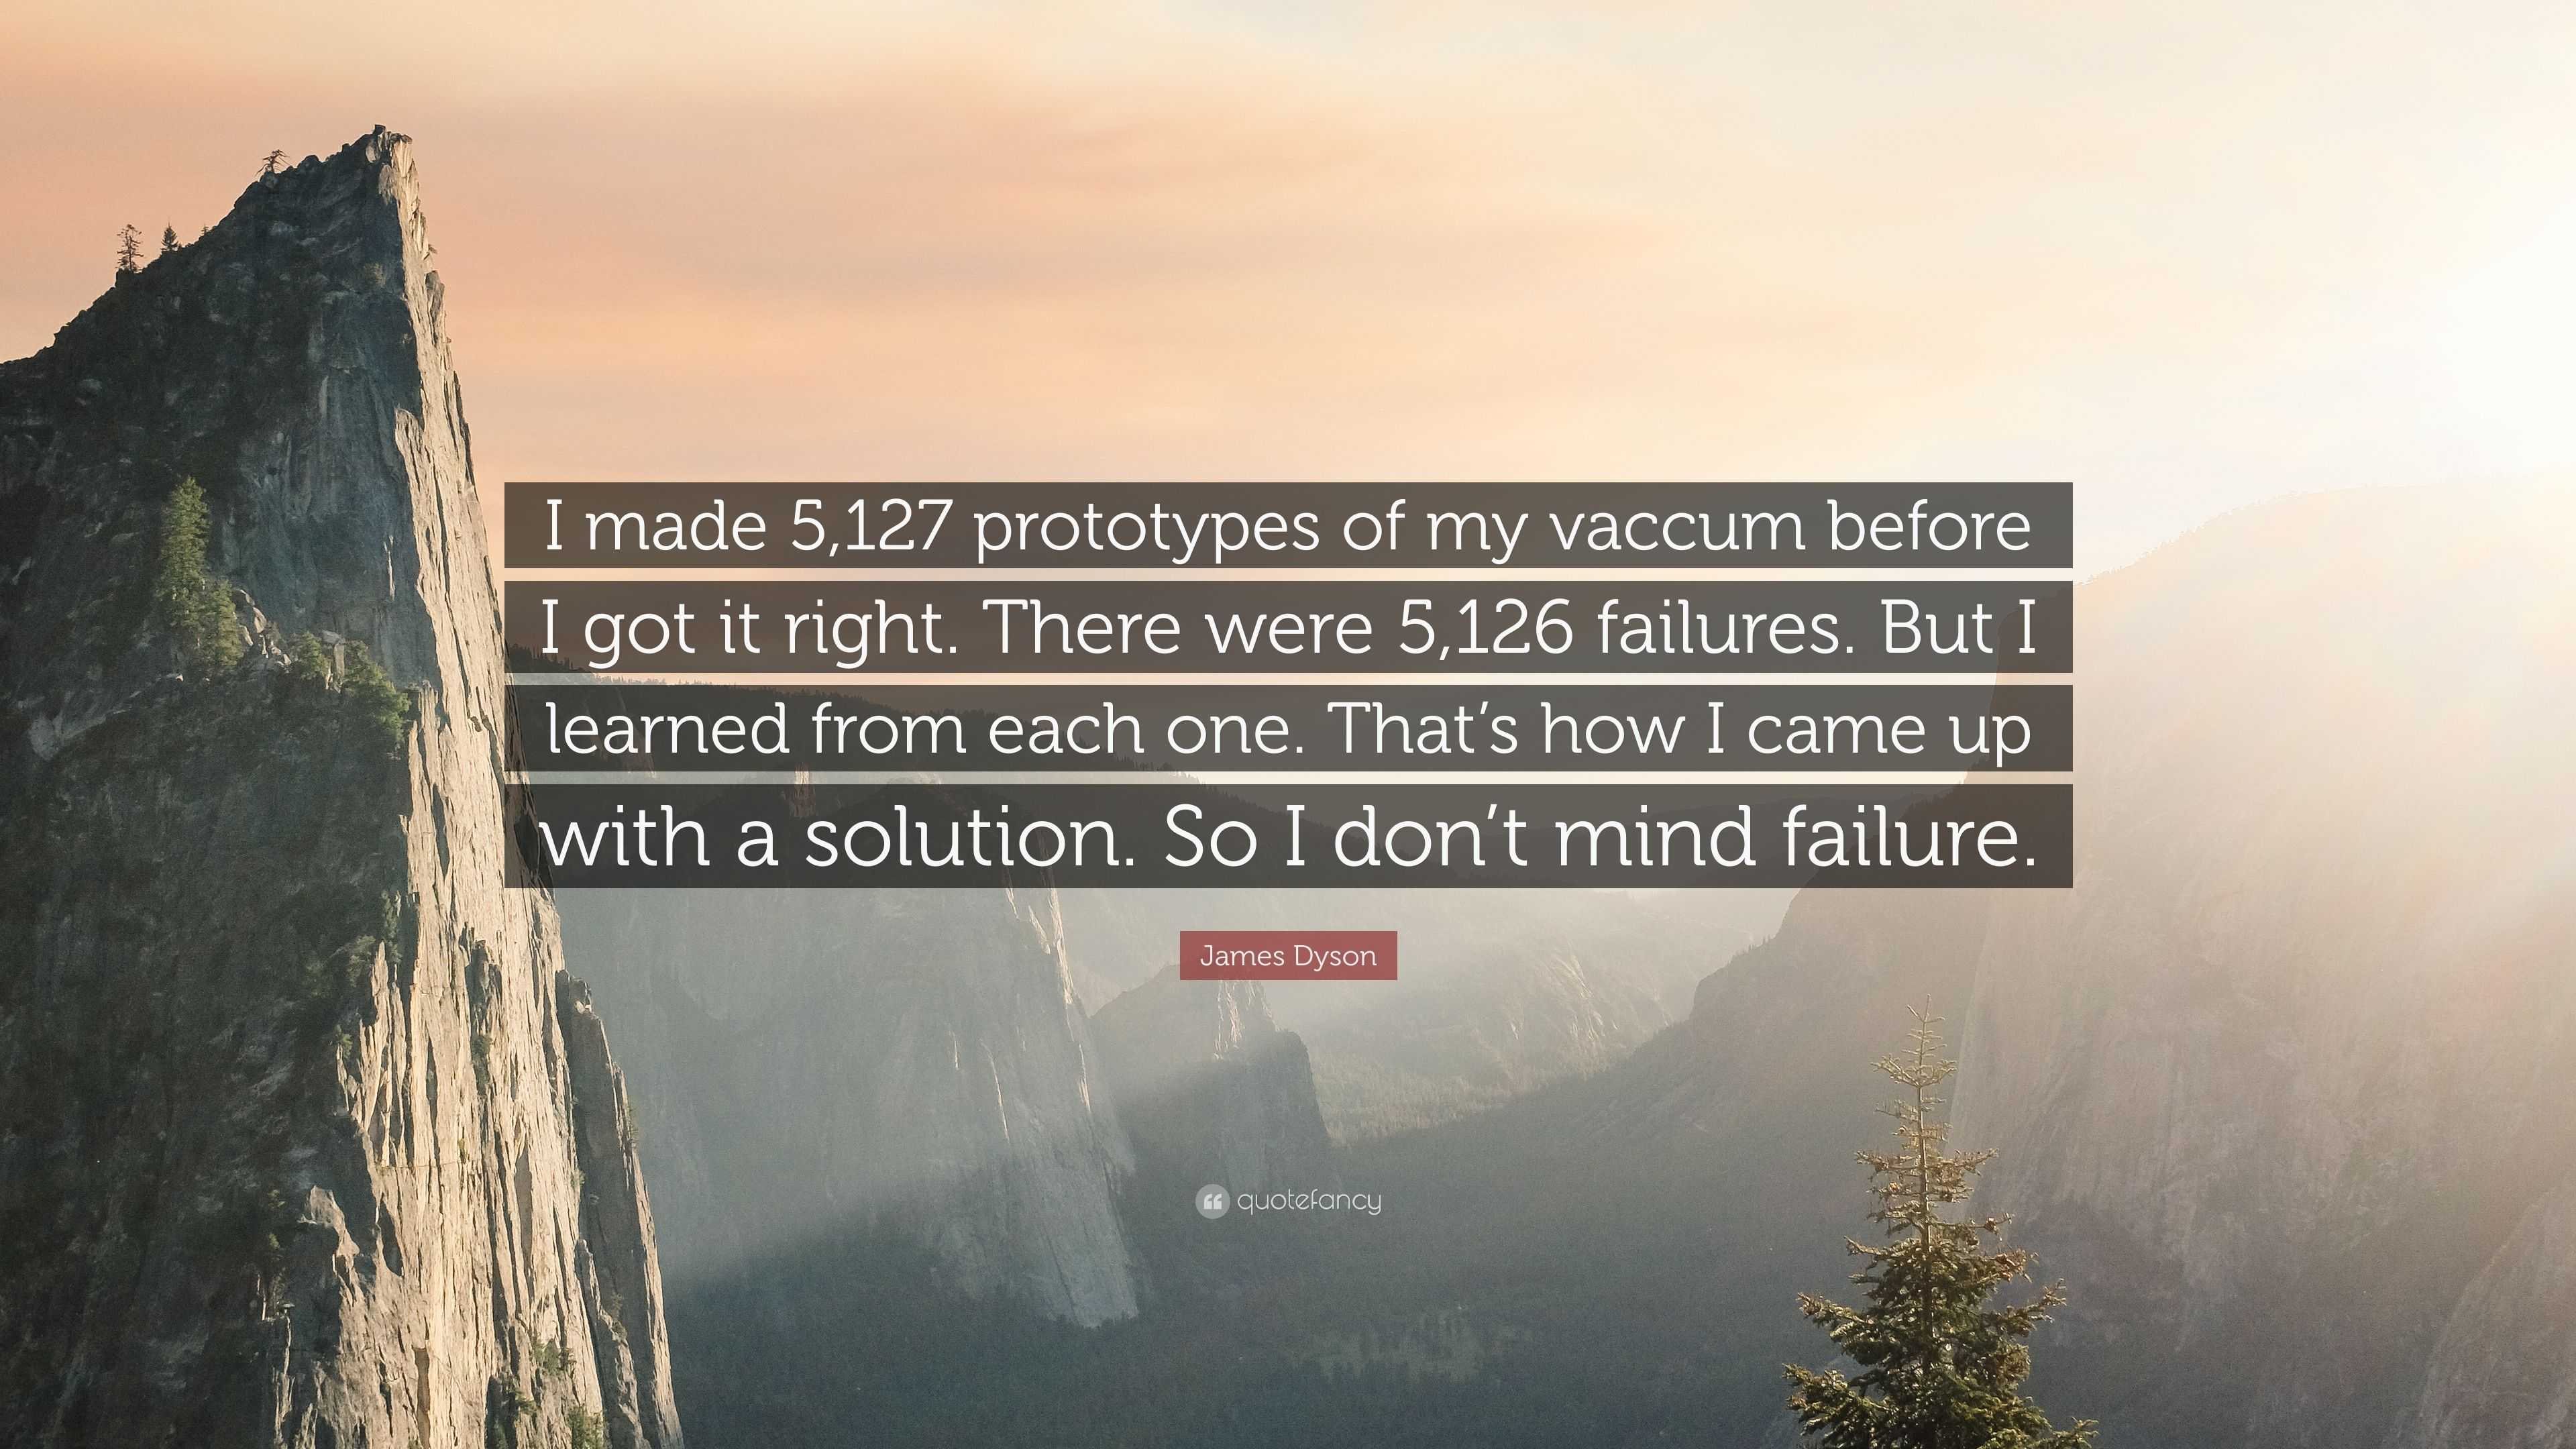 James Dyson's 5217 Failed Prototypes